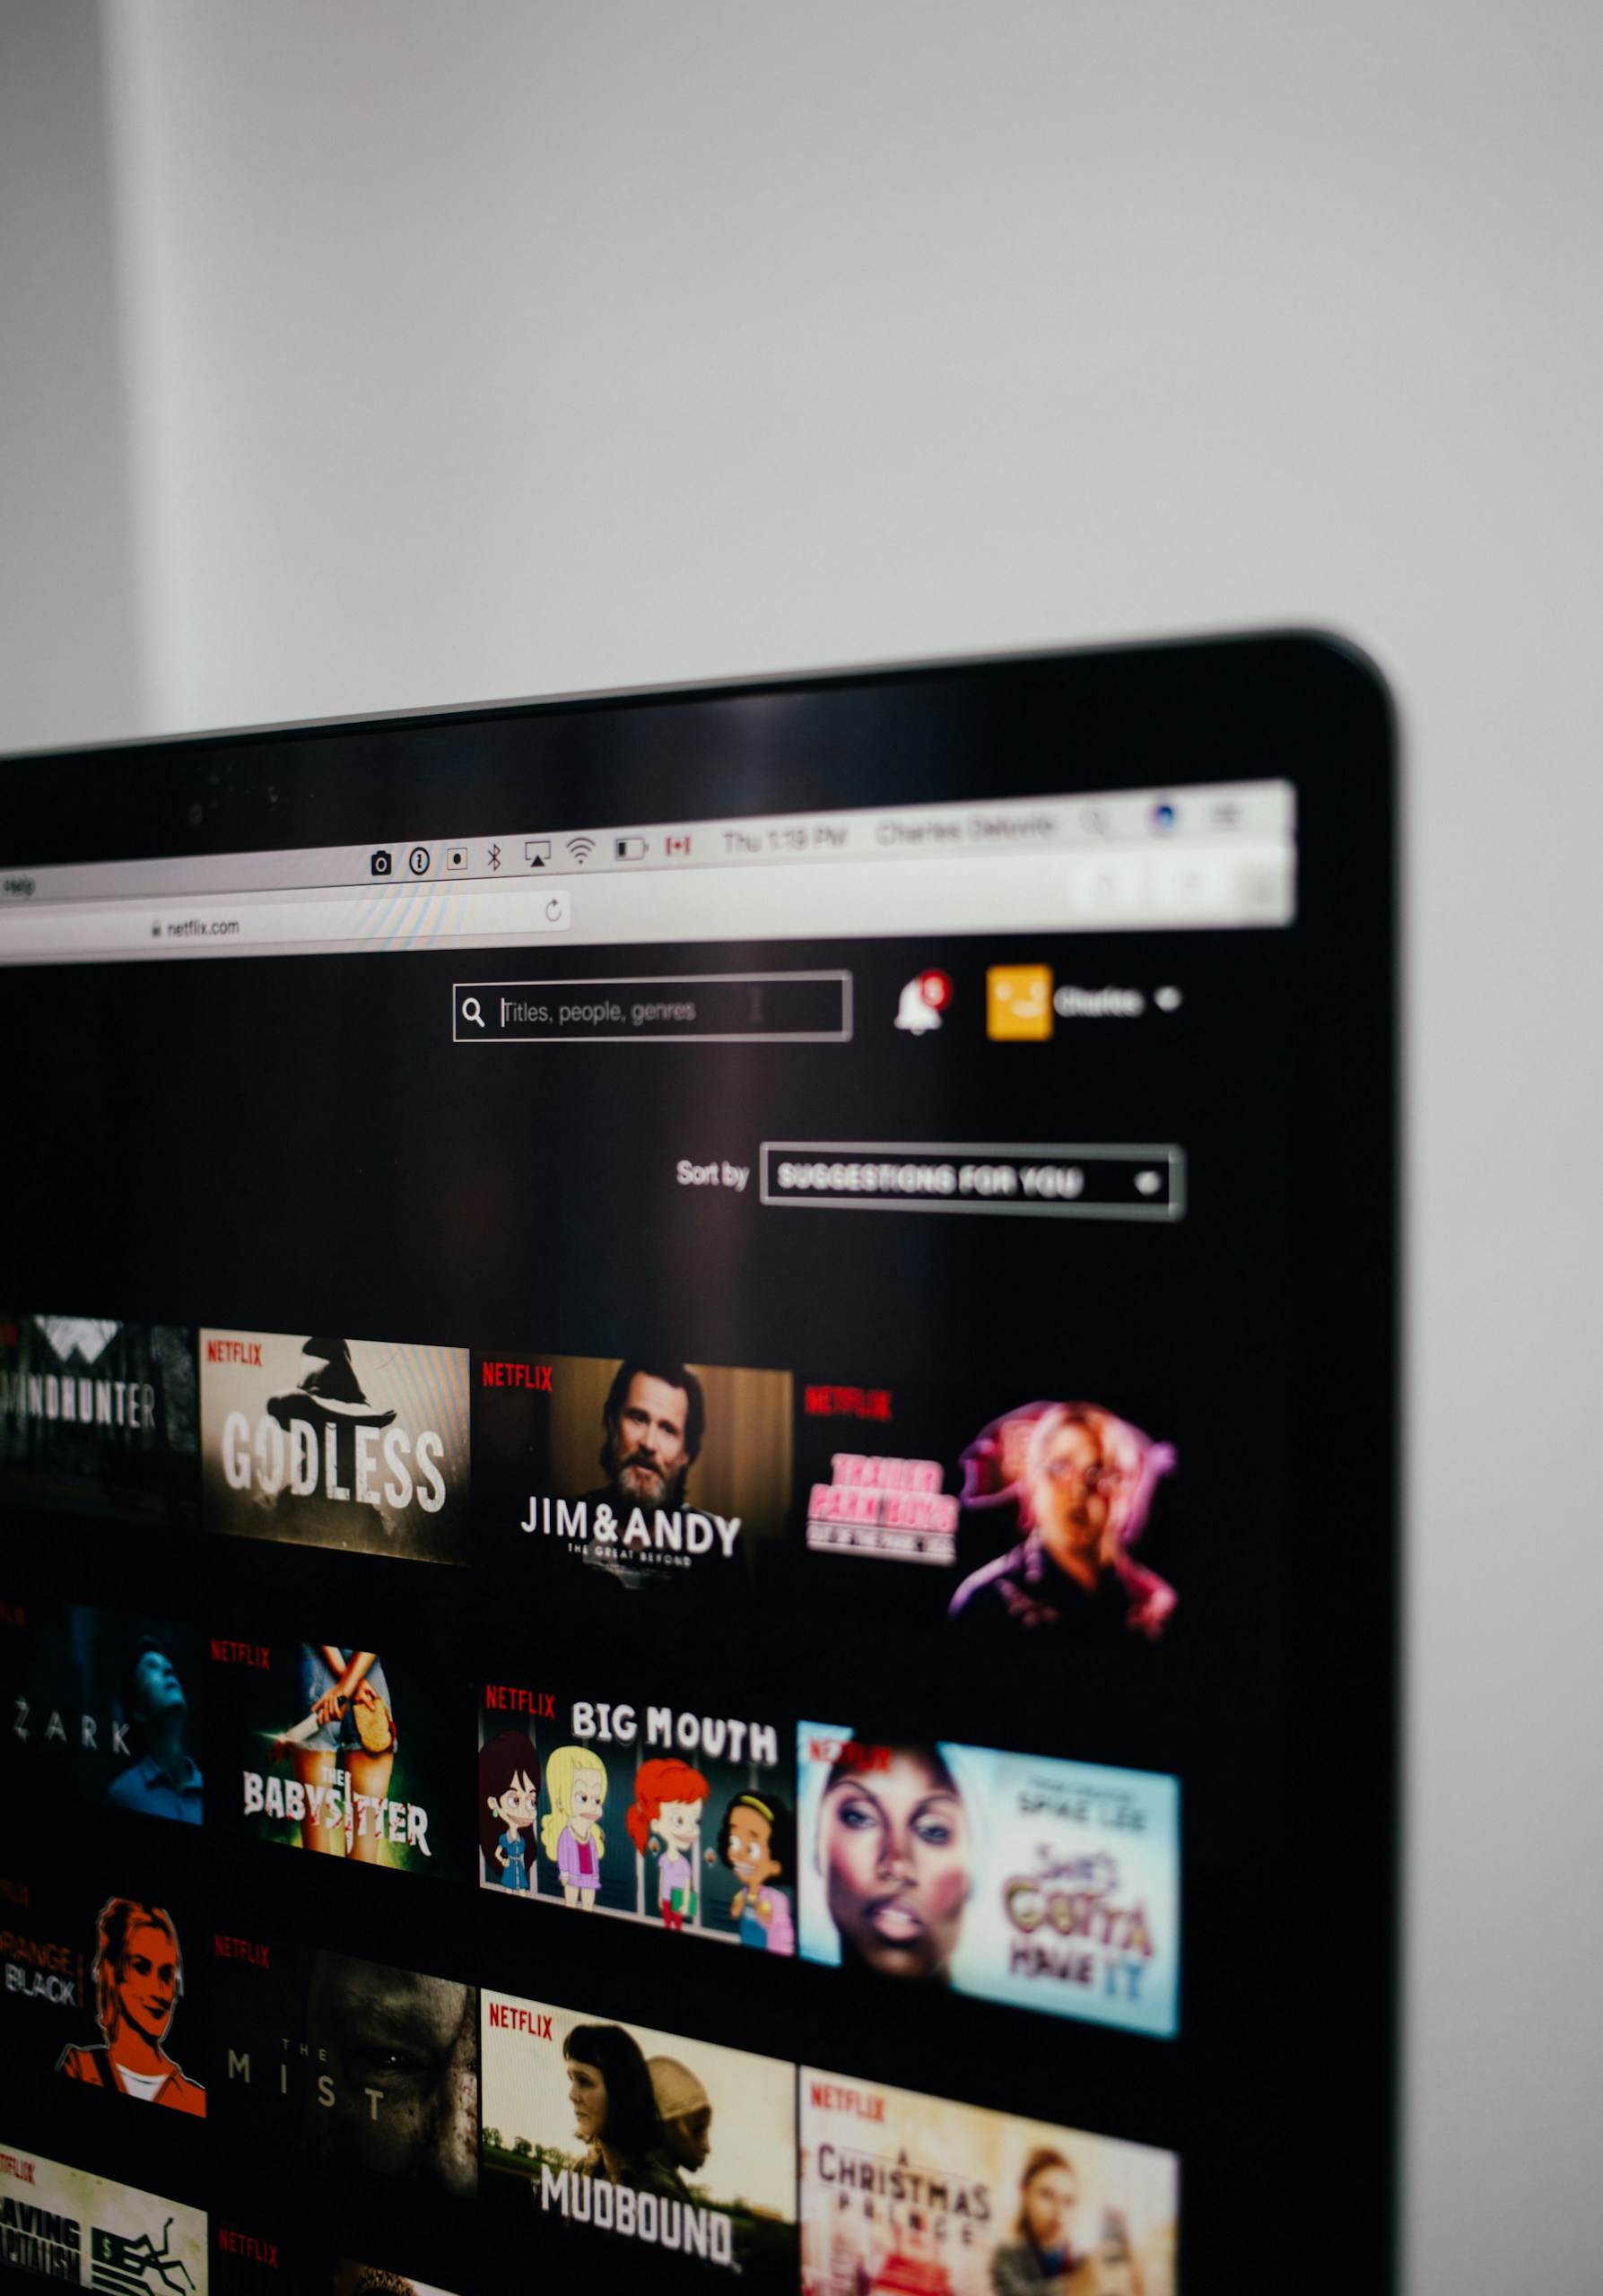 computer monitor showing Netflix selection screen